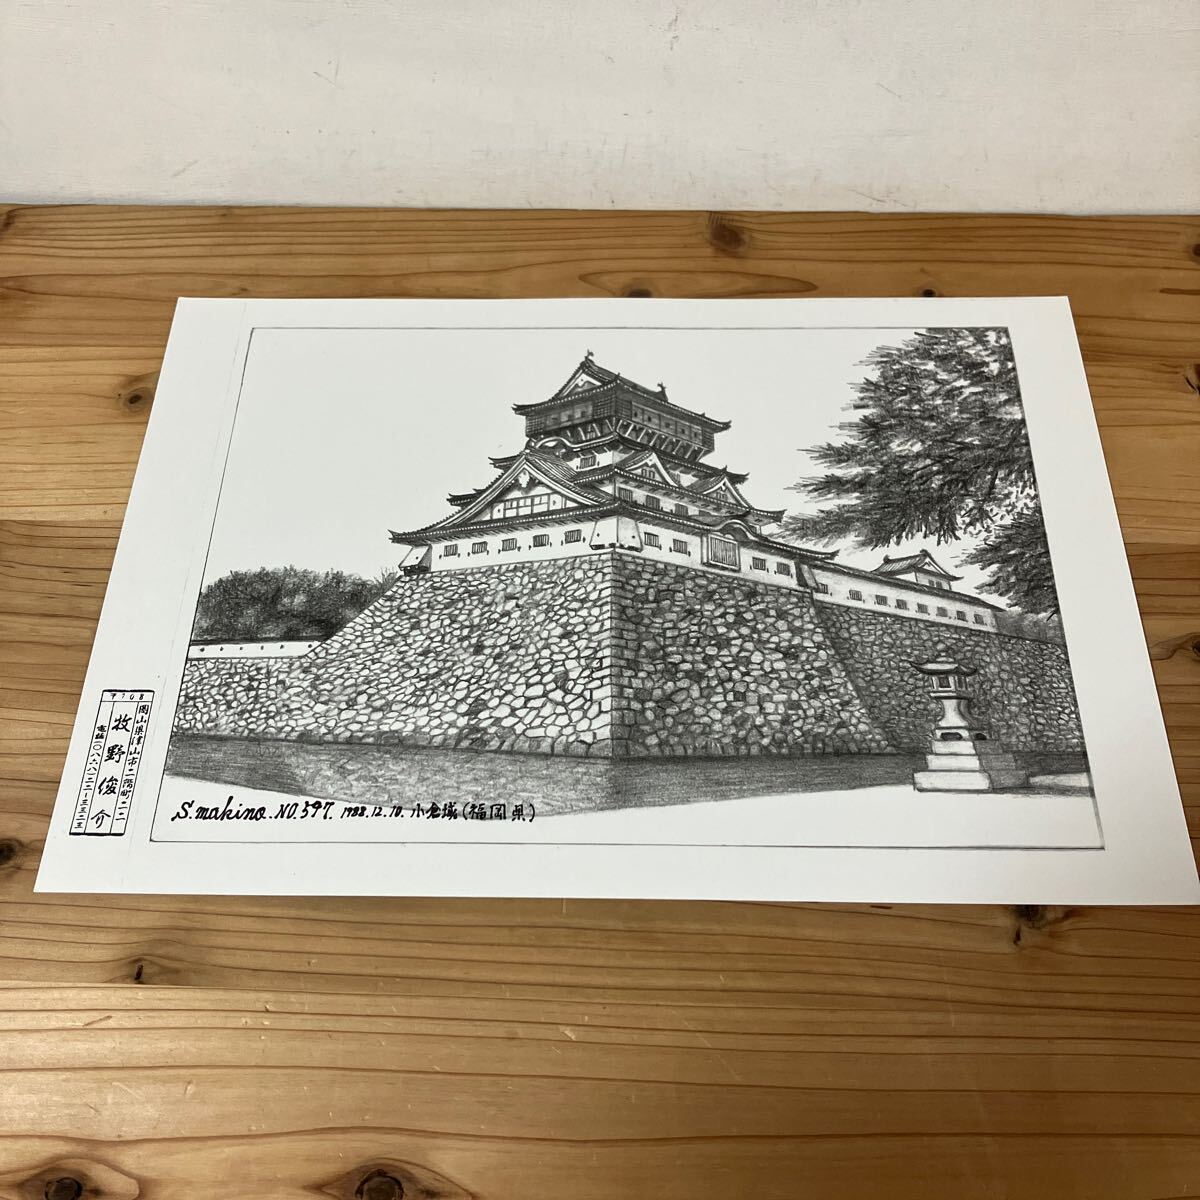 Mao H0305 [Makino Shunsuke Kokura Castle No. 597 Impression d'un dessin au crayon] 1888, Ouvrages d'art, Peinture, Dessin au crayon, Dessin au charbon de bois